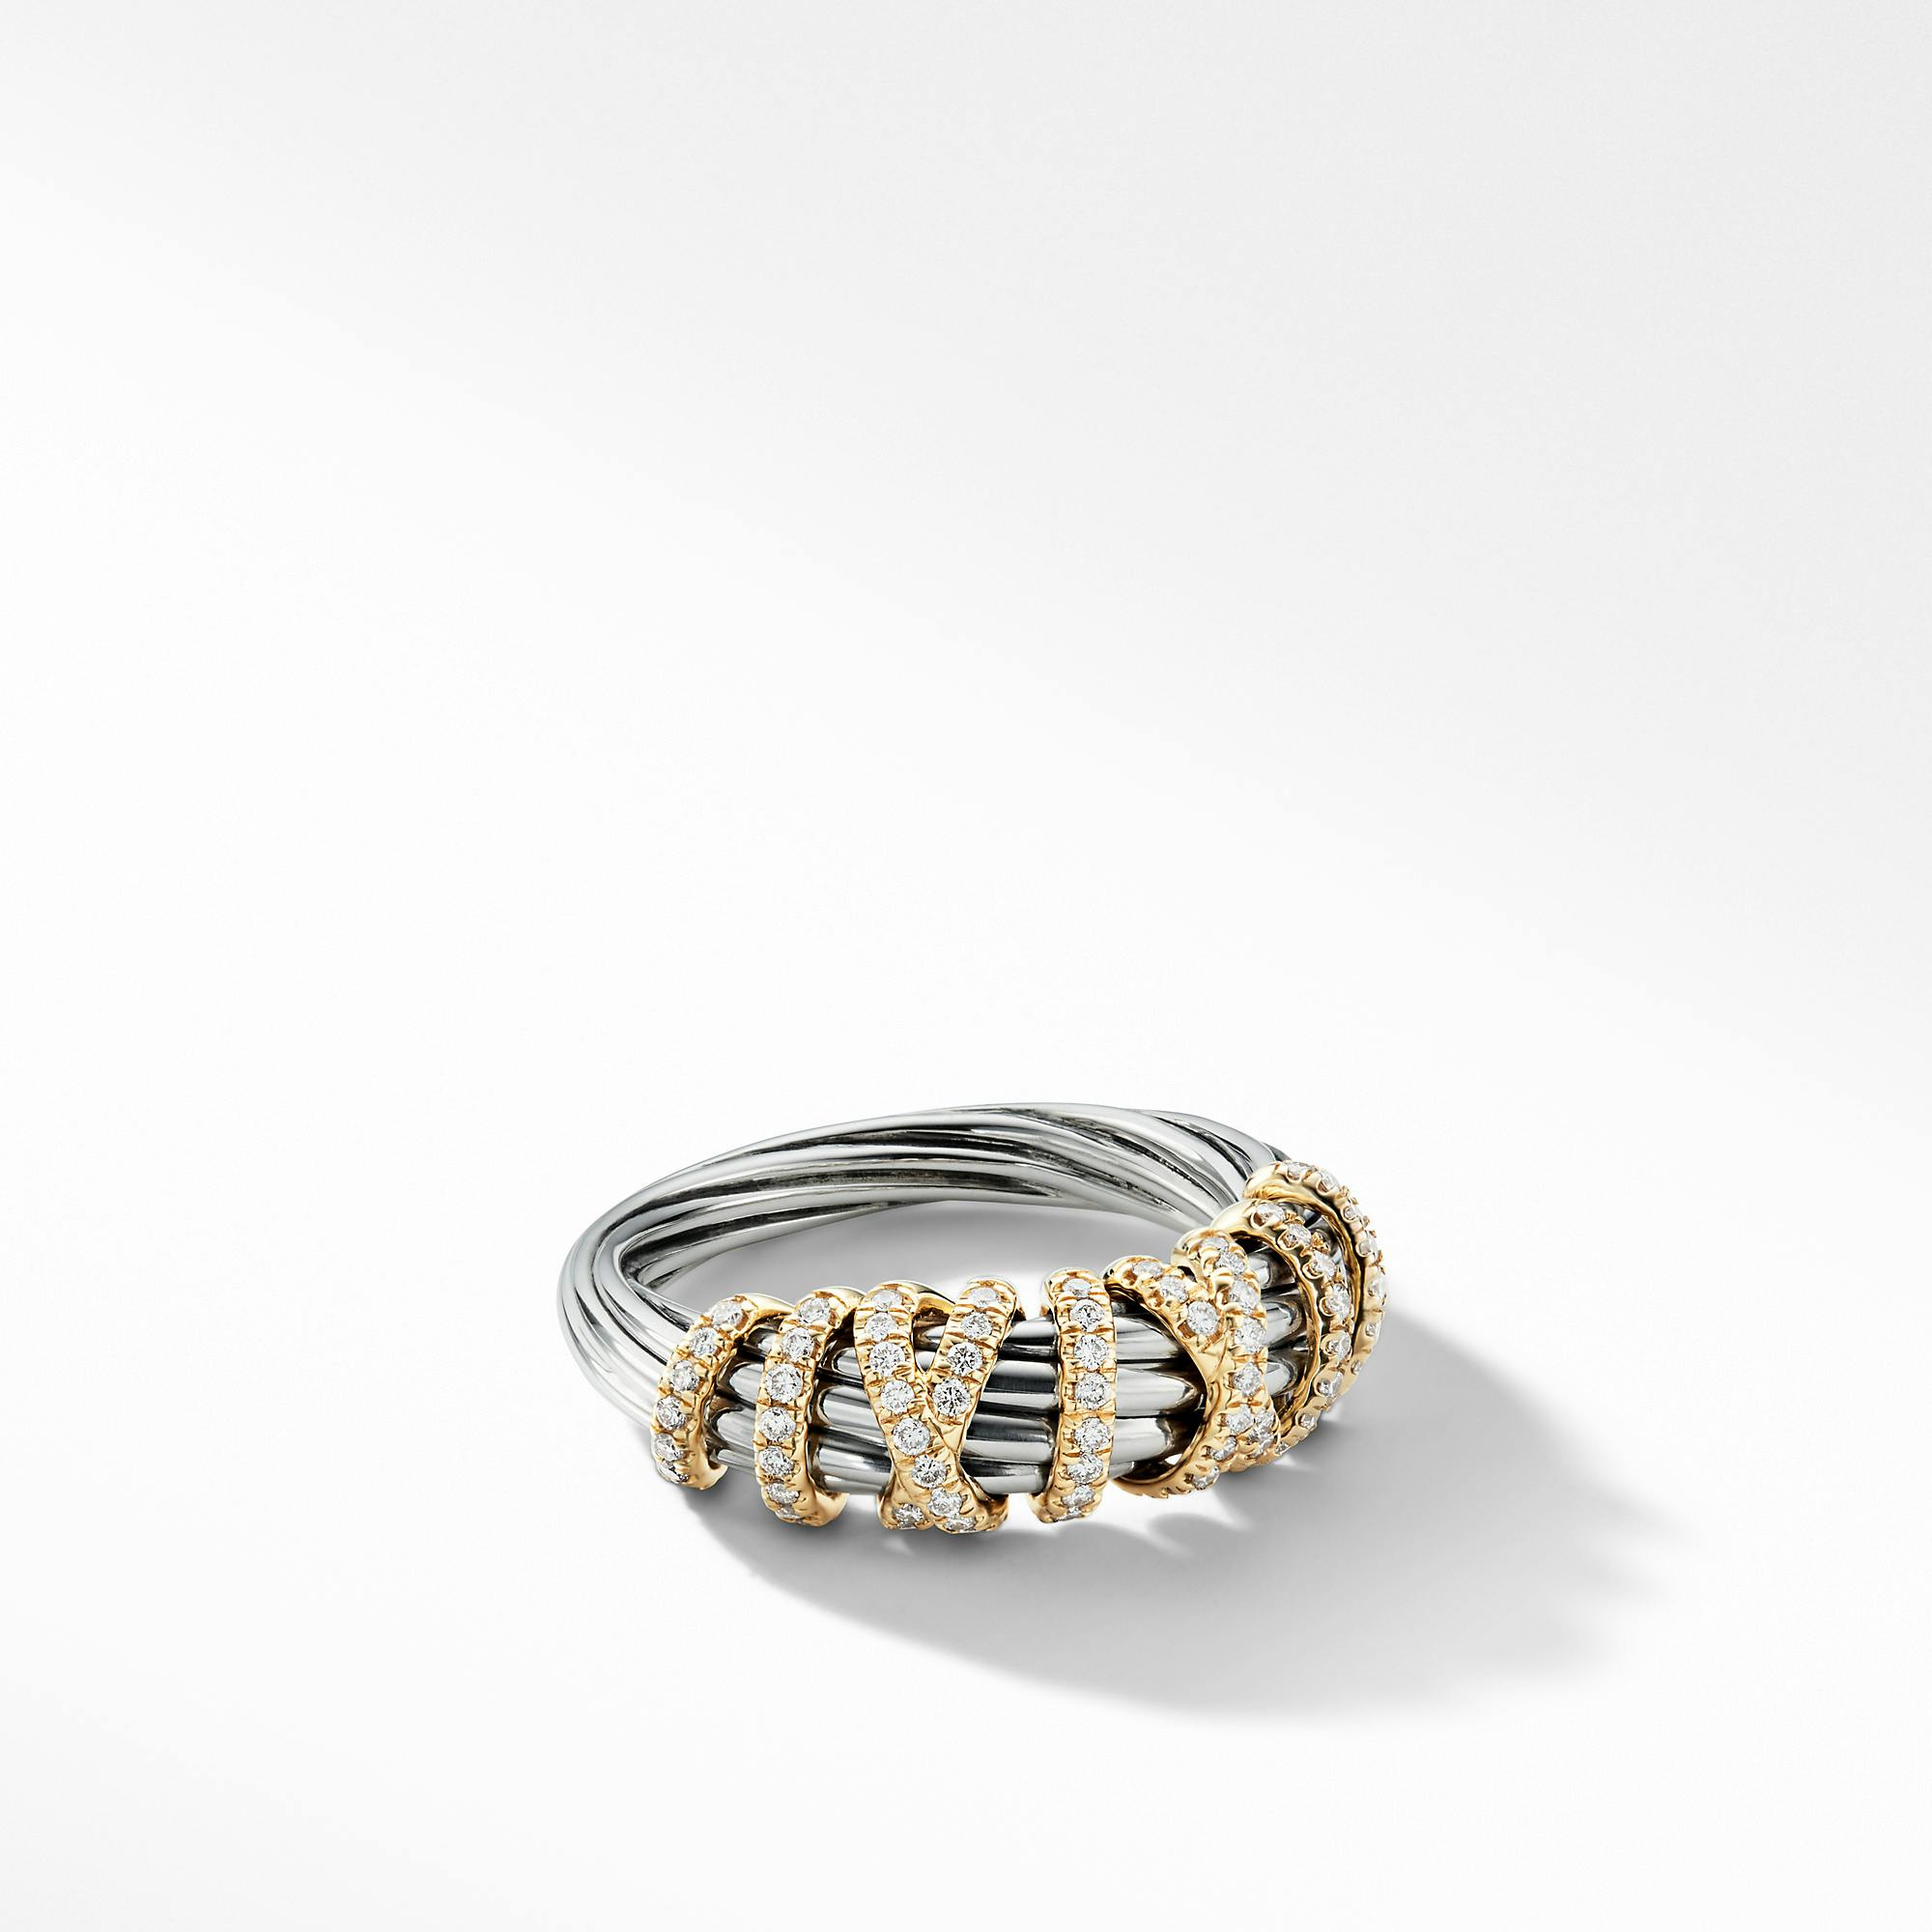 David Yurman Helena Ring with Diamonds and 18K Gold, 8mm